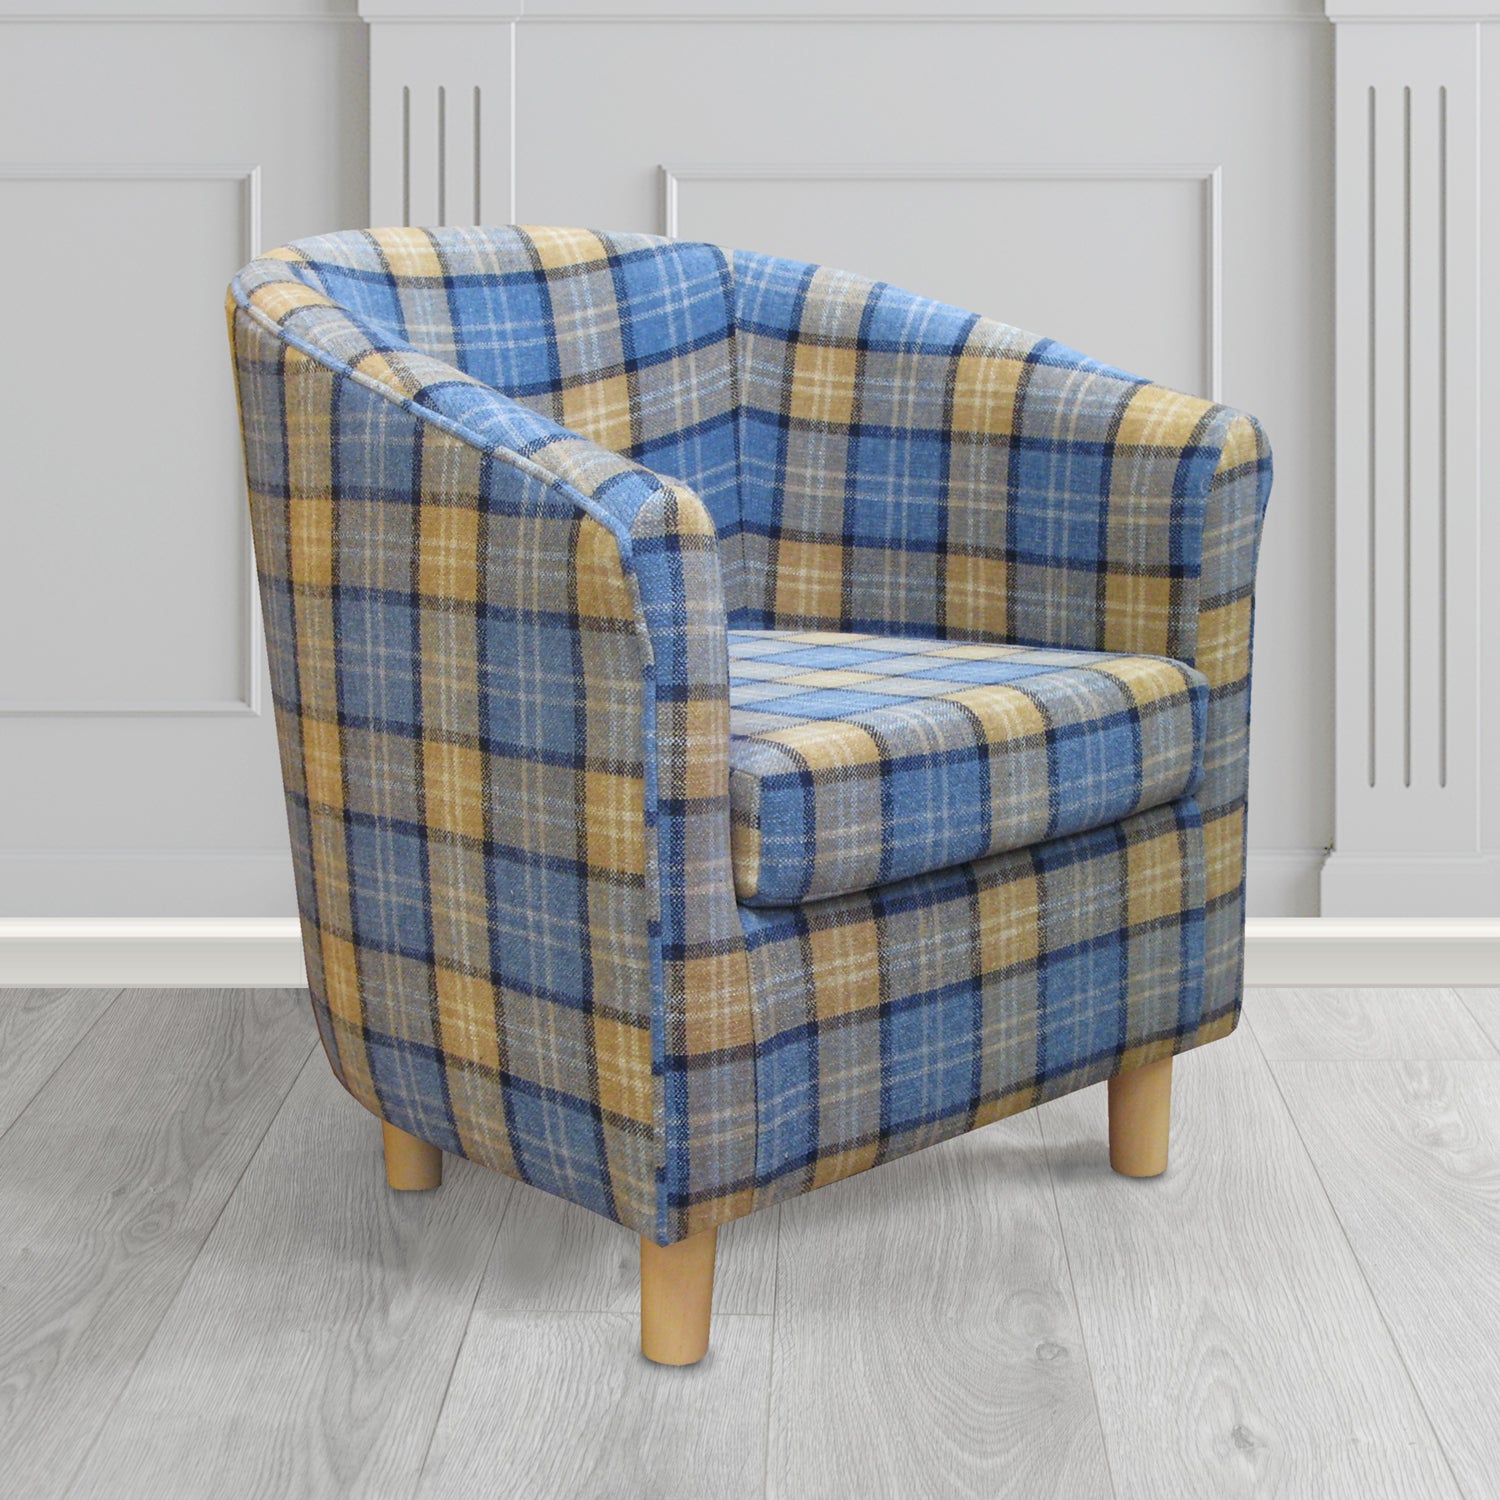 Tuscany Tub Chair in Lana Ocean Tartan LAN1604 Crib 5 Fabric